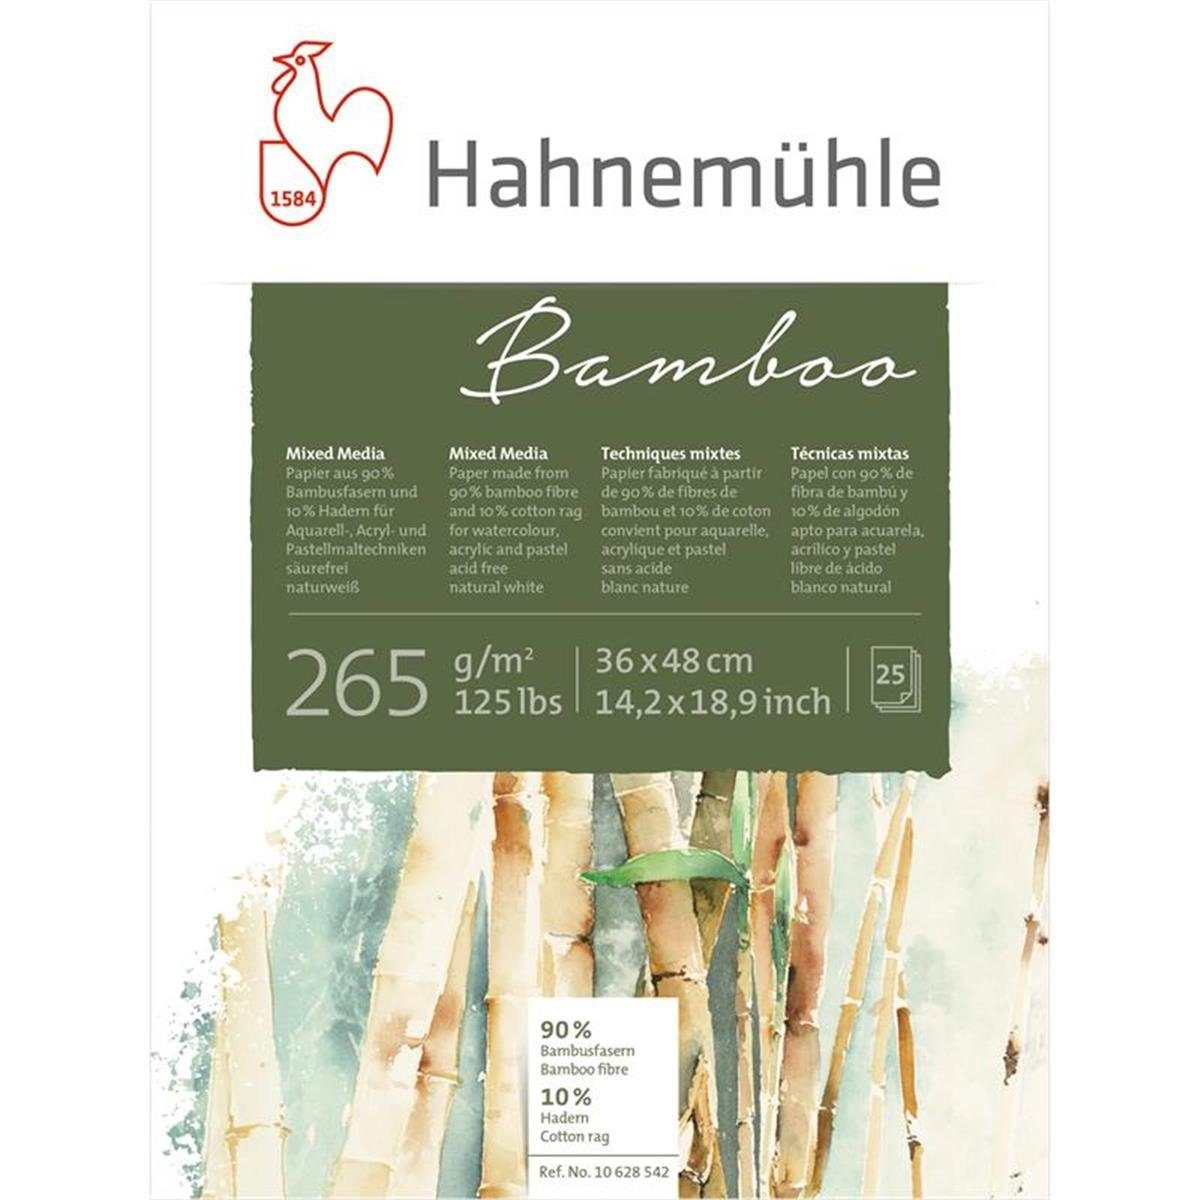 Hahnemühle Wanduhr Bamboo Mixed 48 g/m² Media cm 25 265 Blatt - 36 - - x